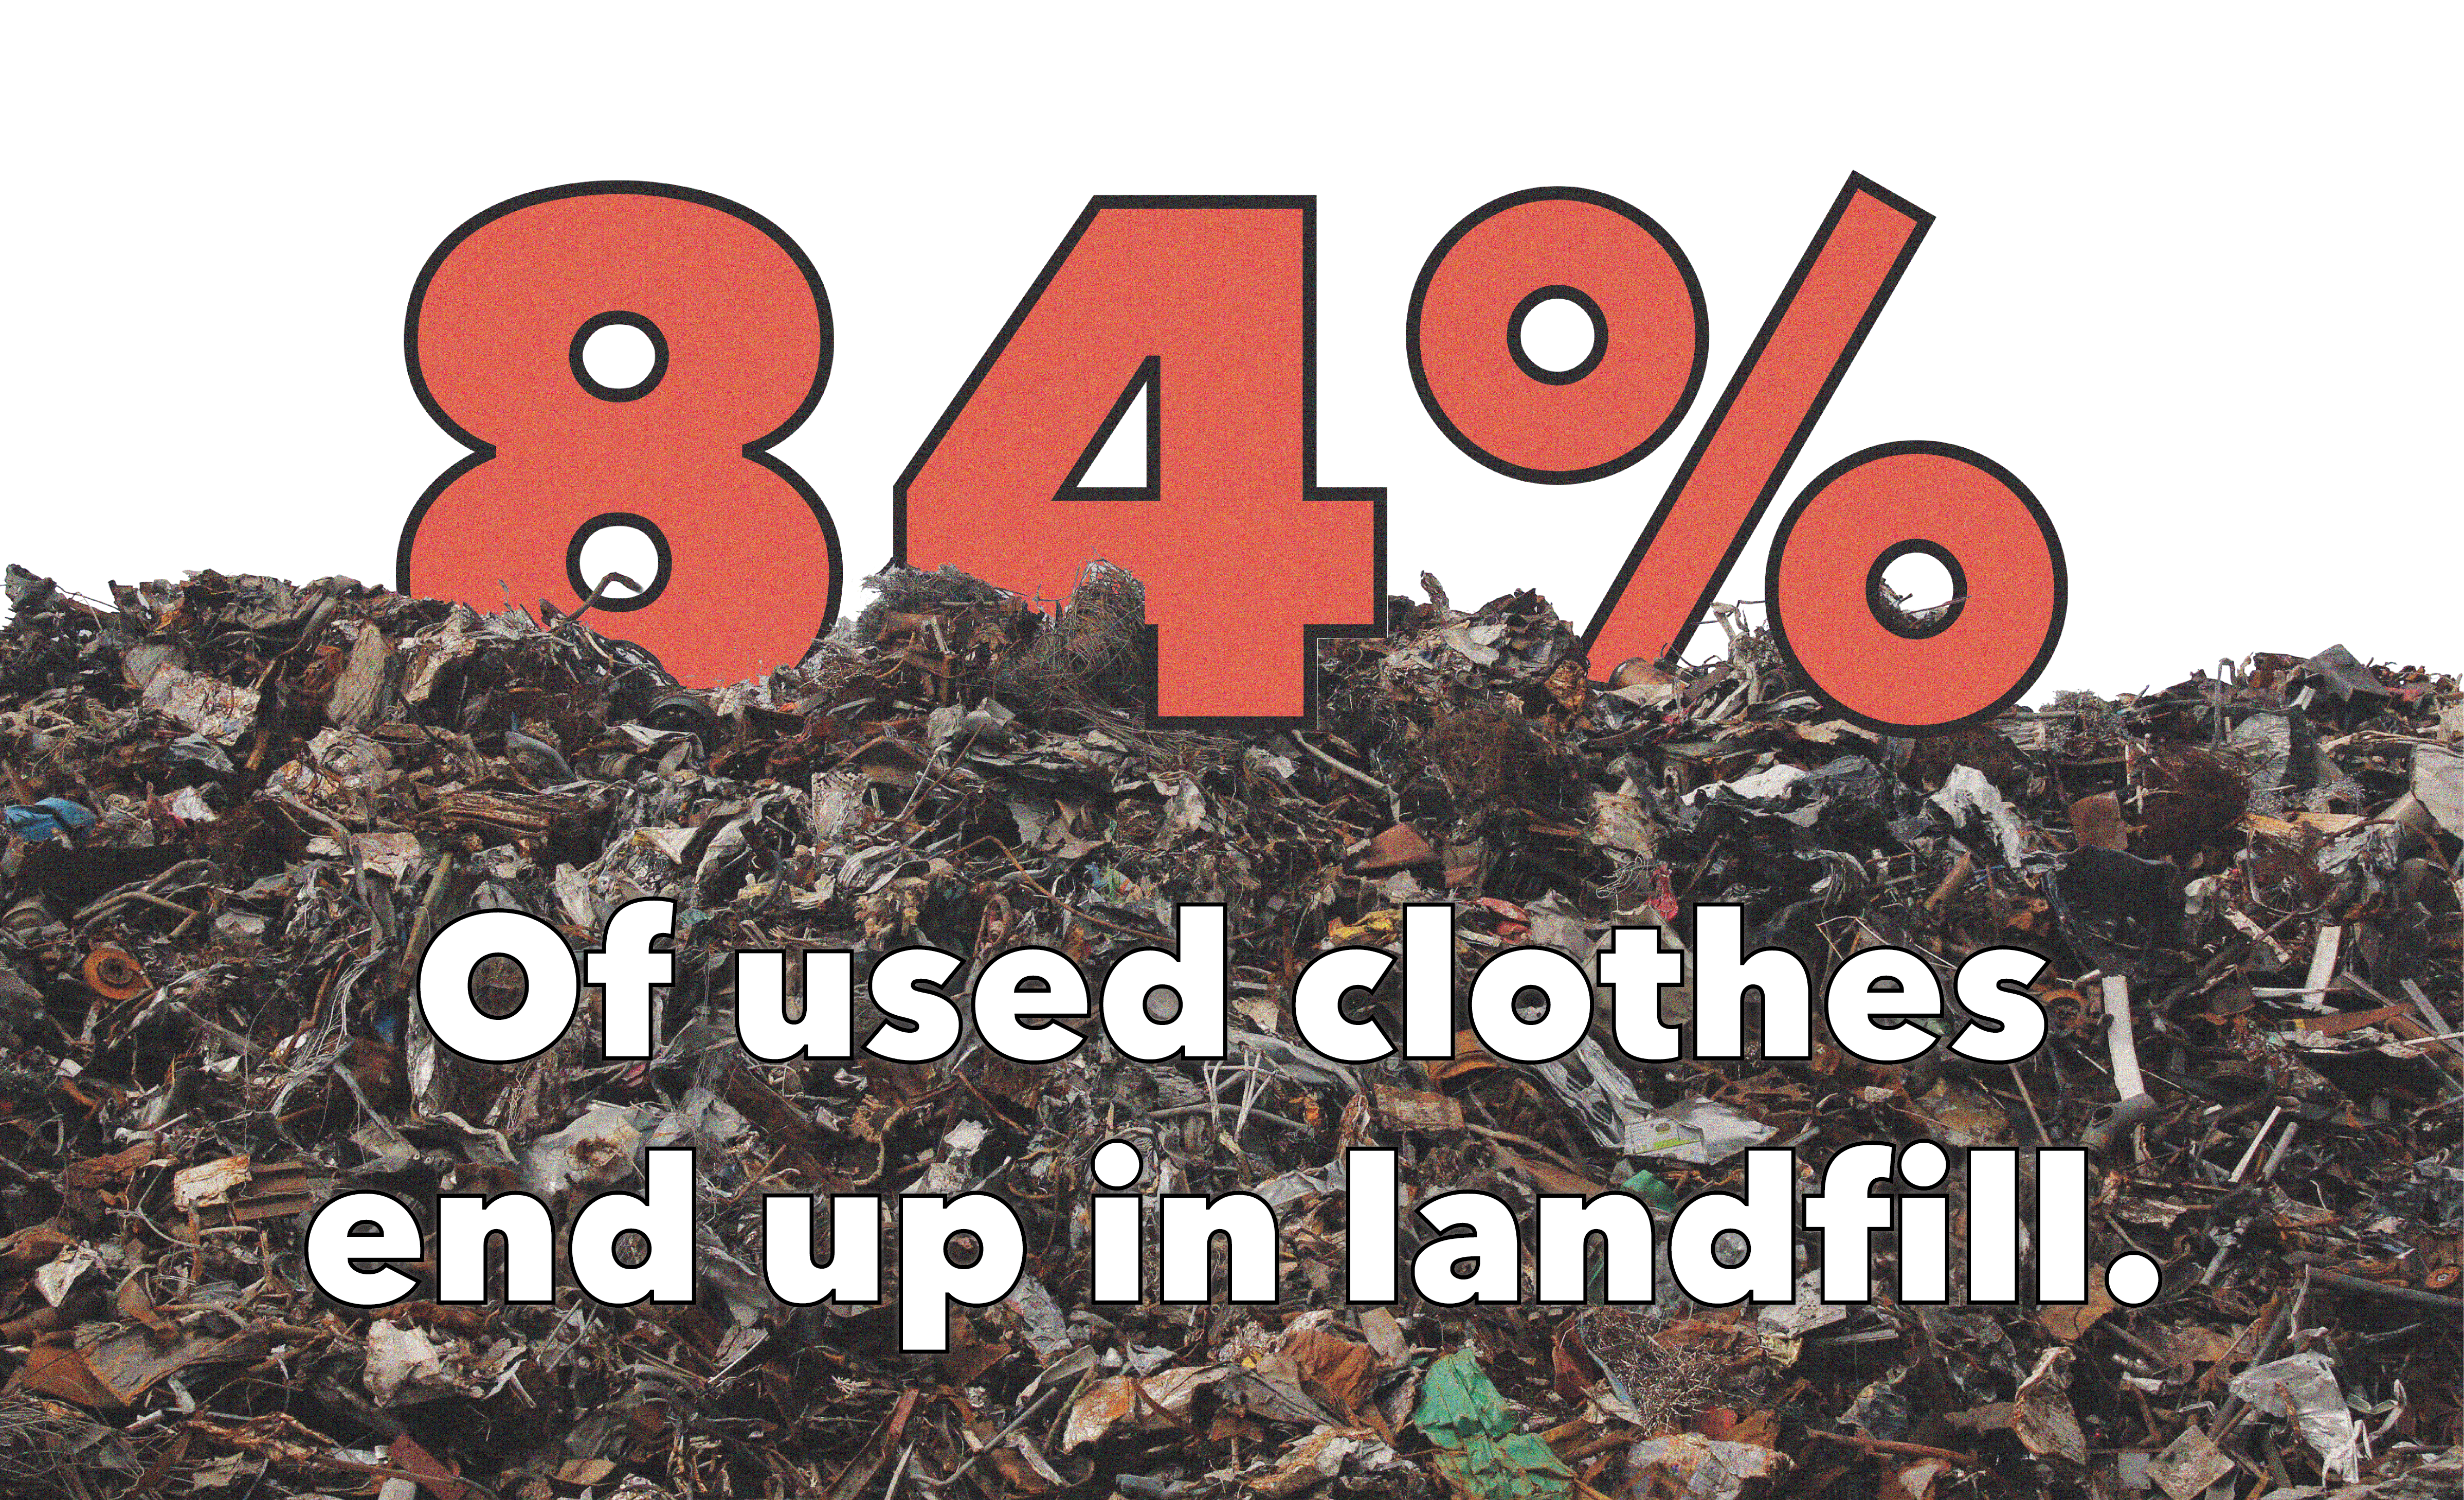 statistics, landfills, clothes, waste